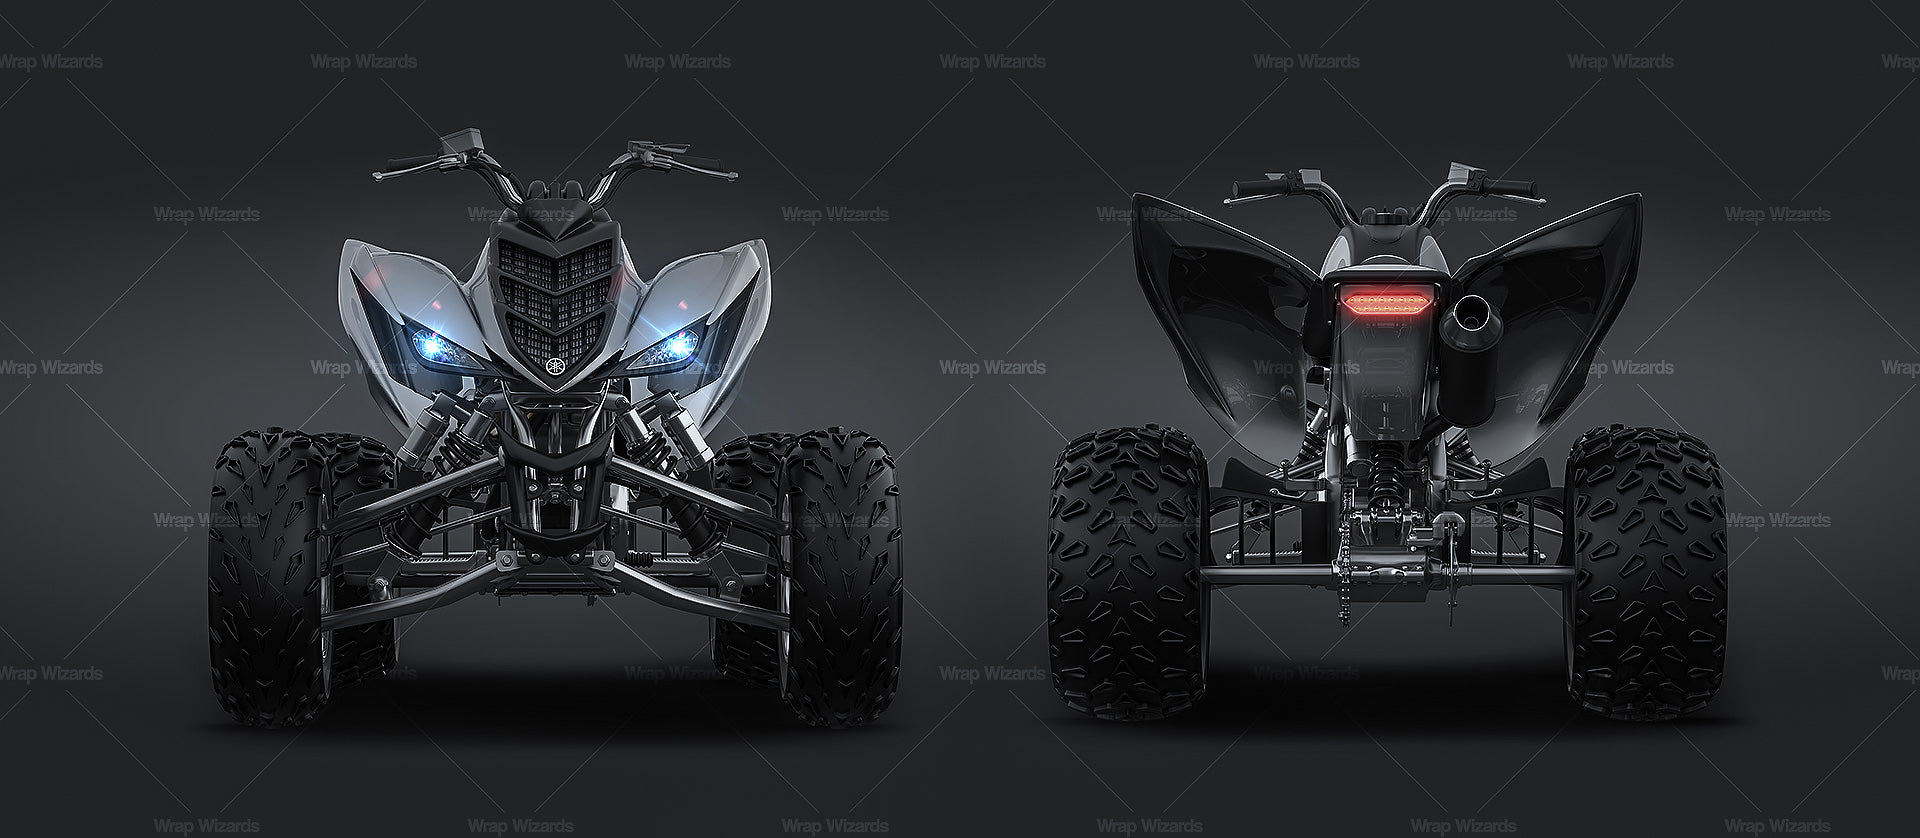 Yamaha Raptor Quad 2011 - Buggy Mockup